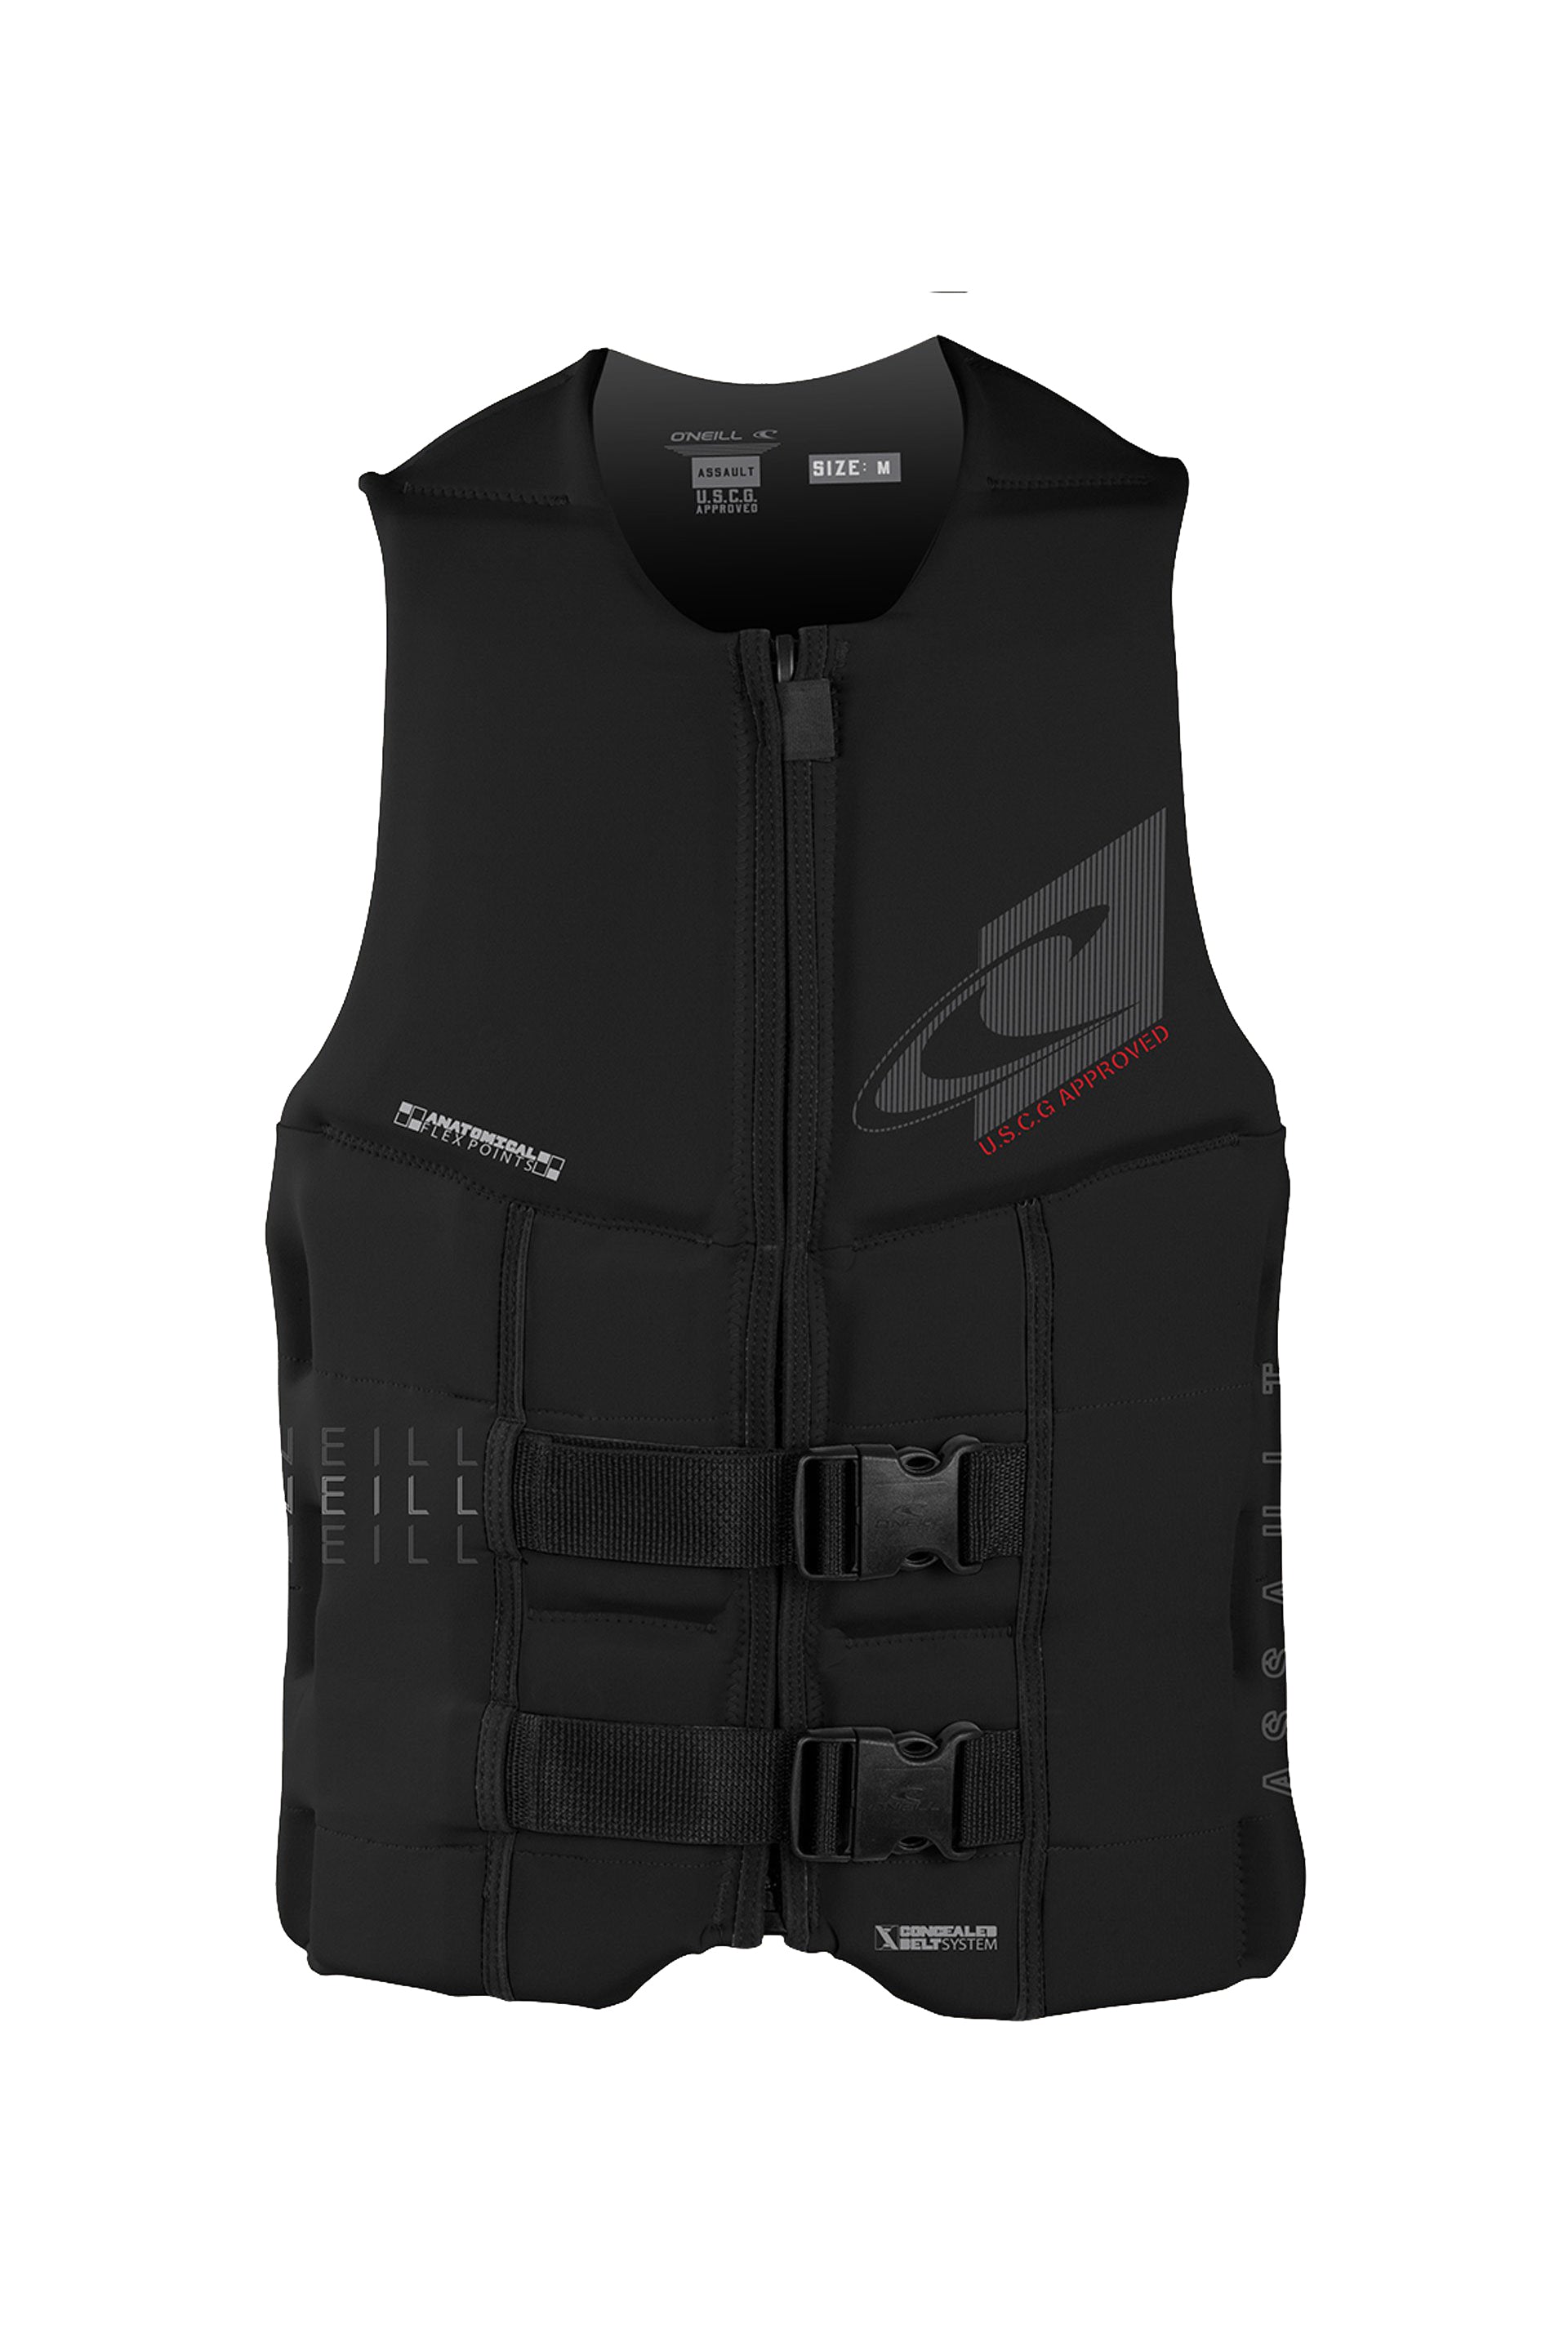 O Neill Assault FZ USCG Life Vest A00-Black-Black XL